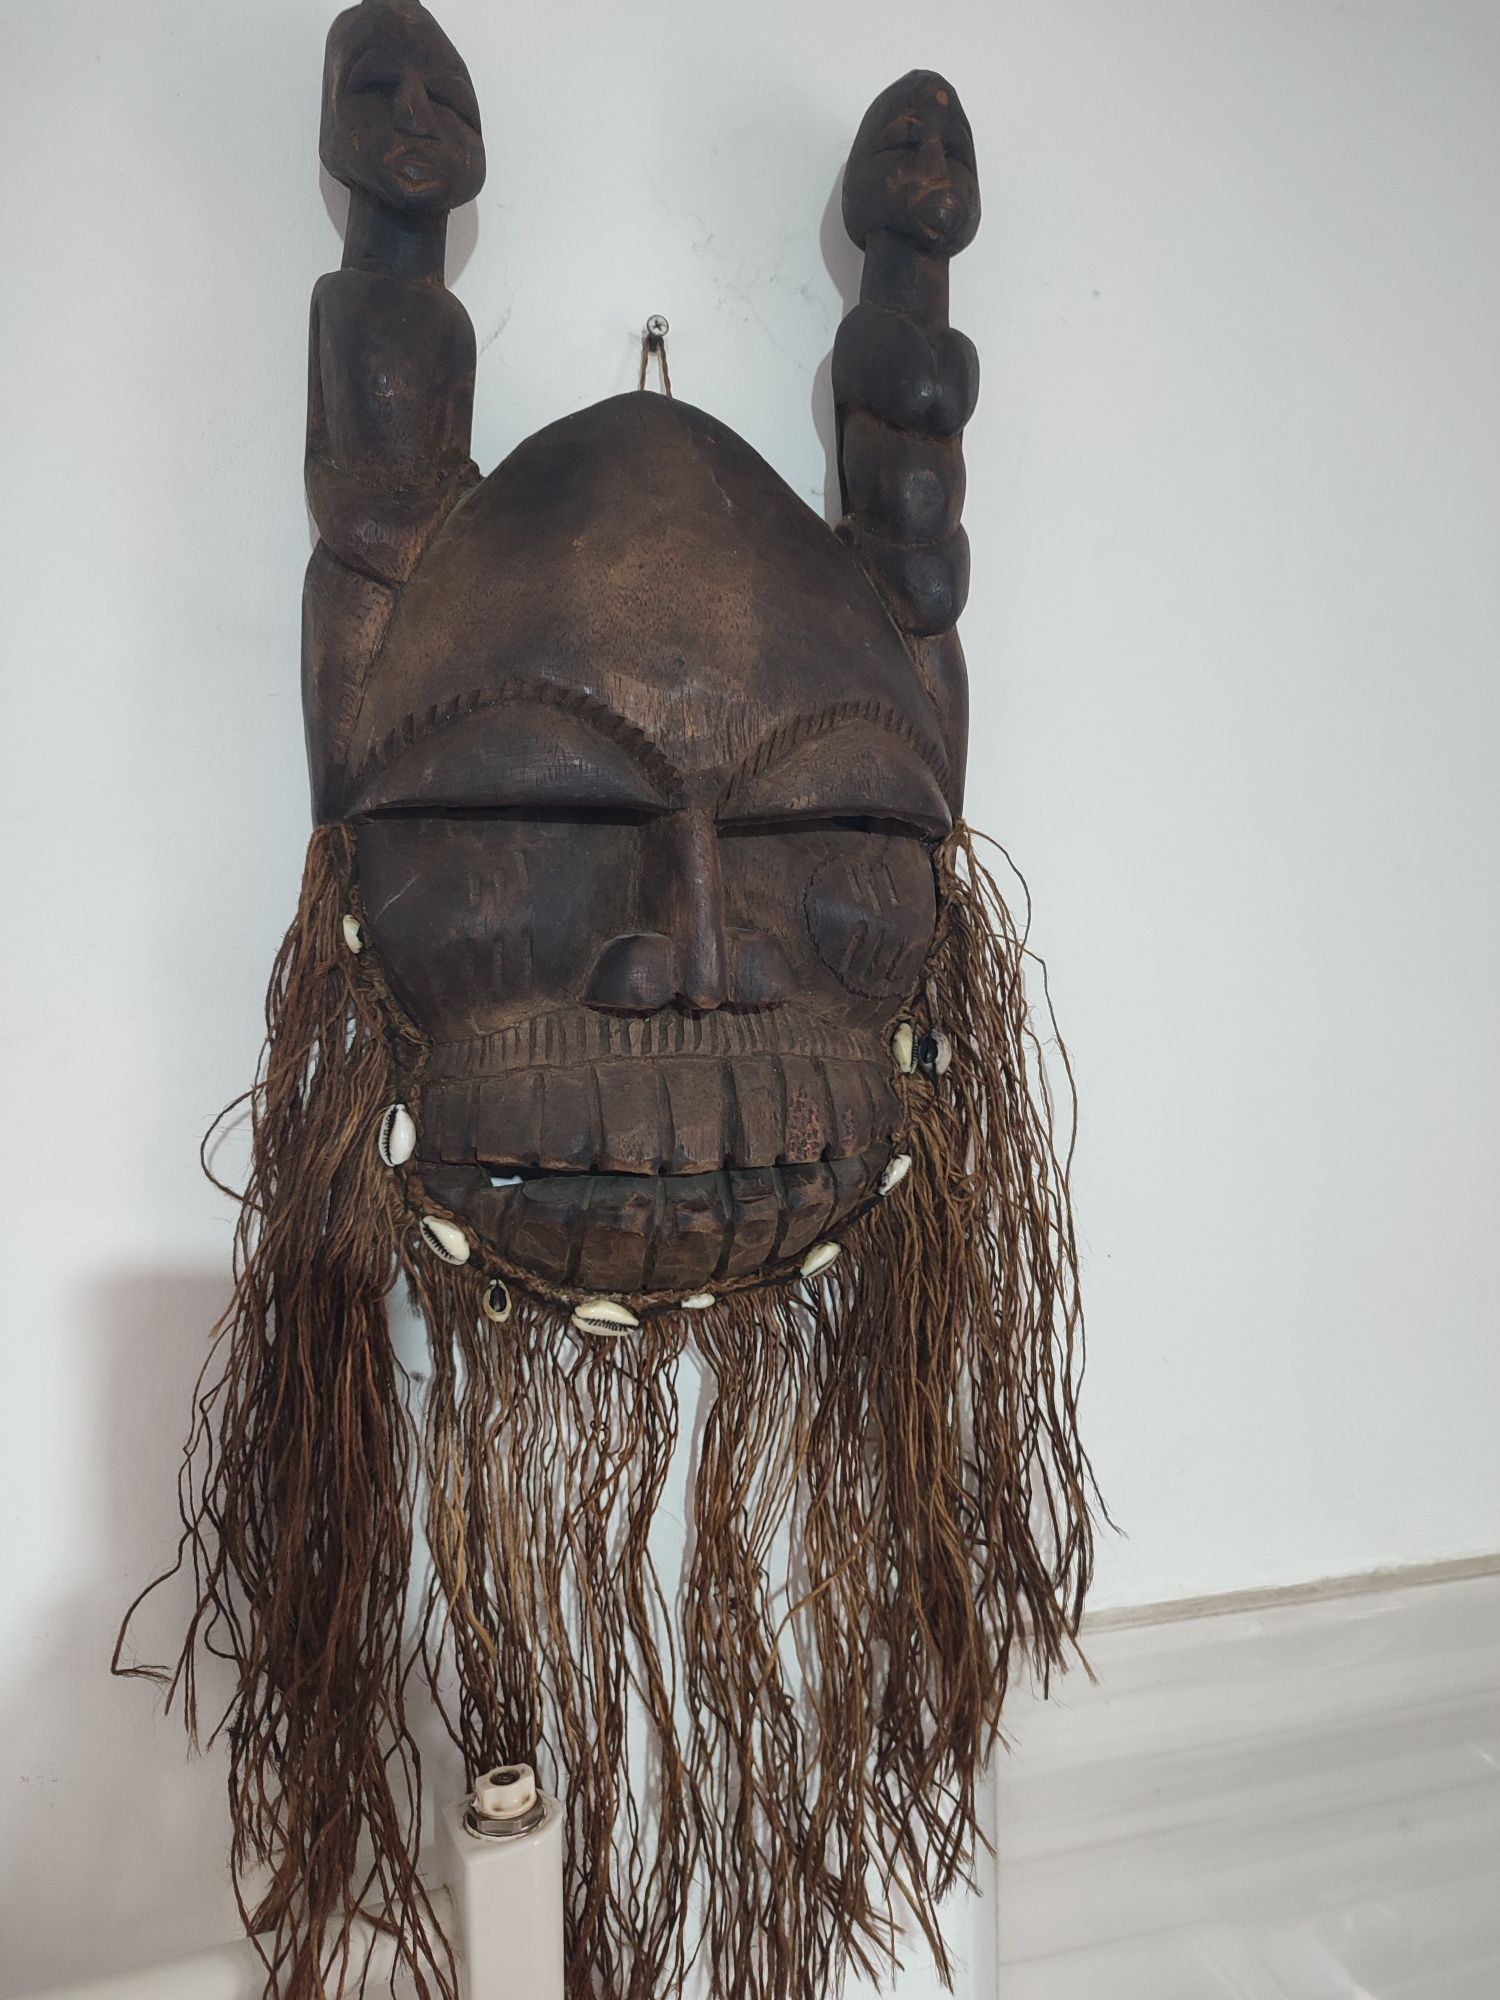 Masca africana veche